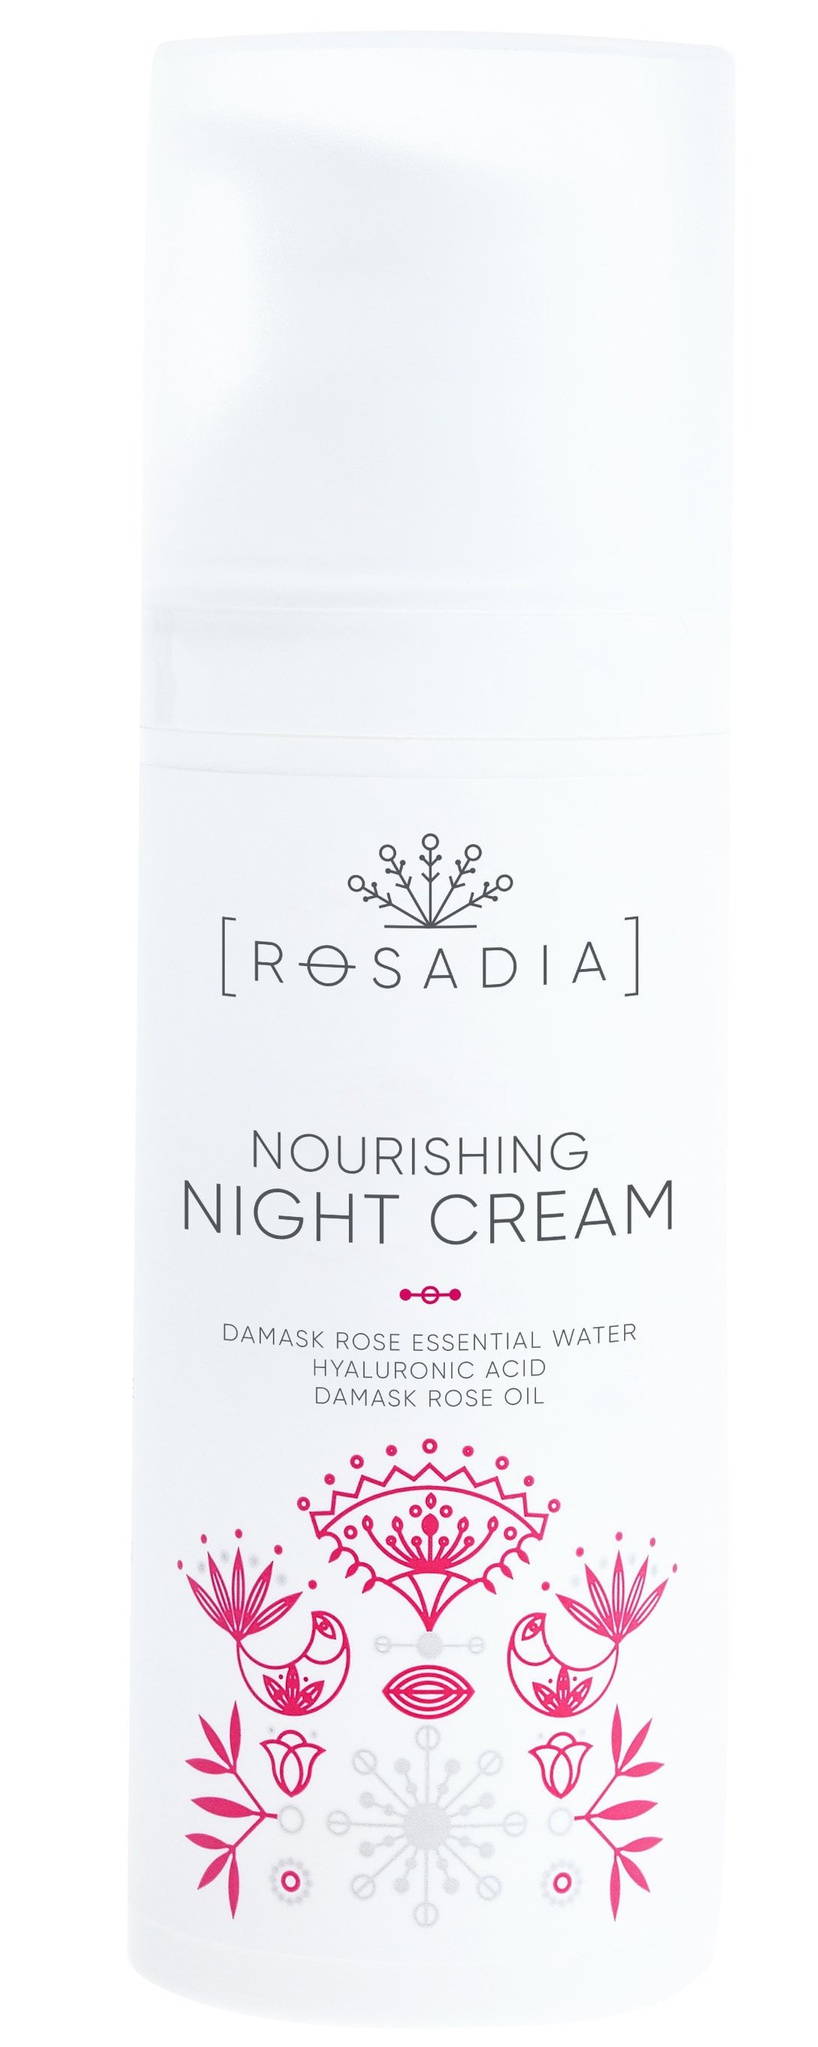 Rosadia Nourishing Night Cream